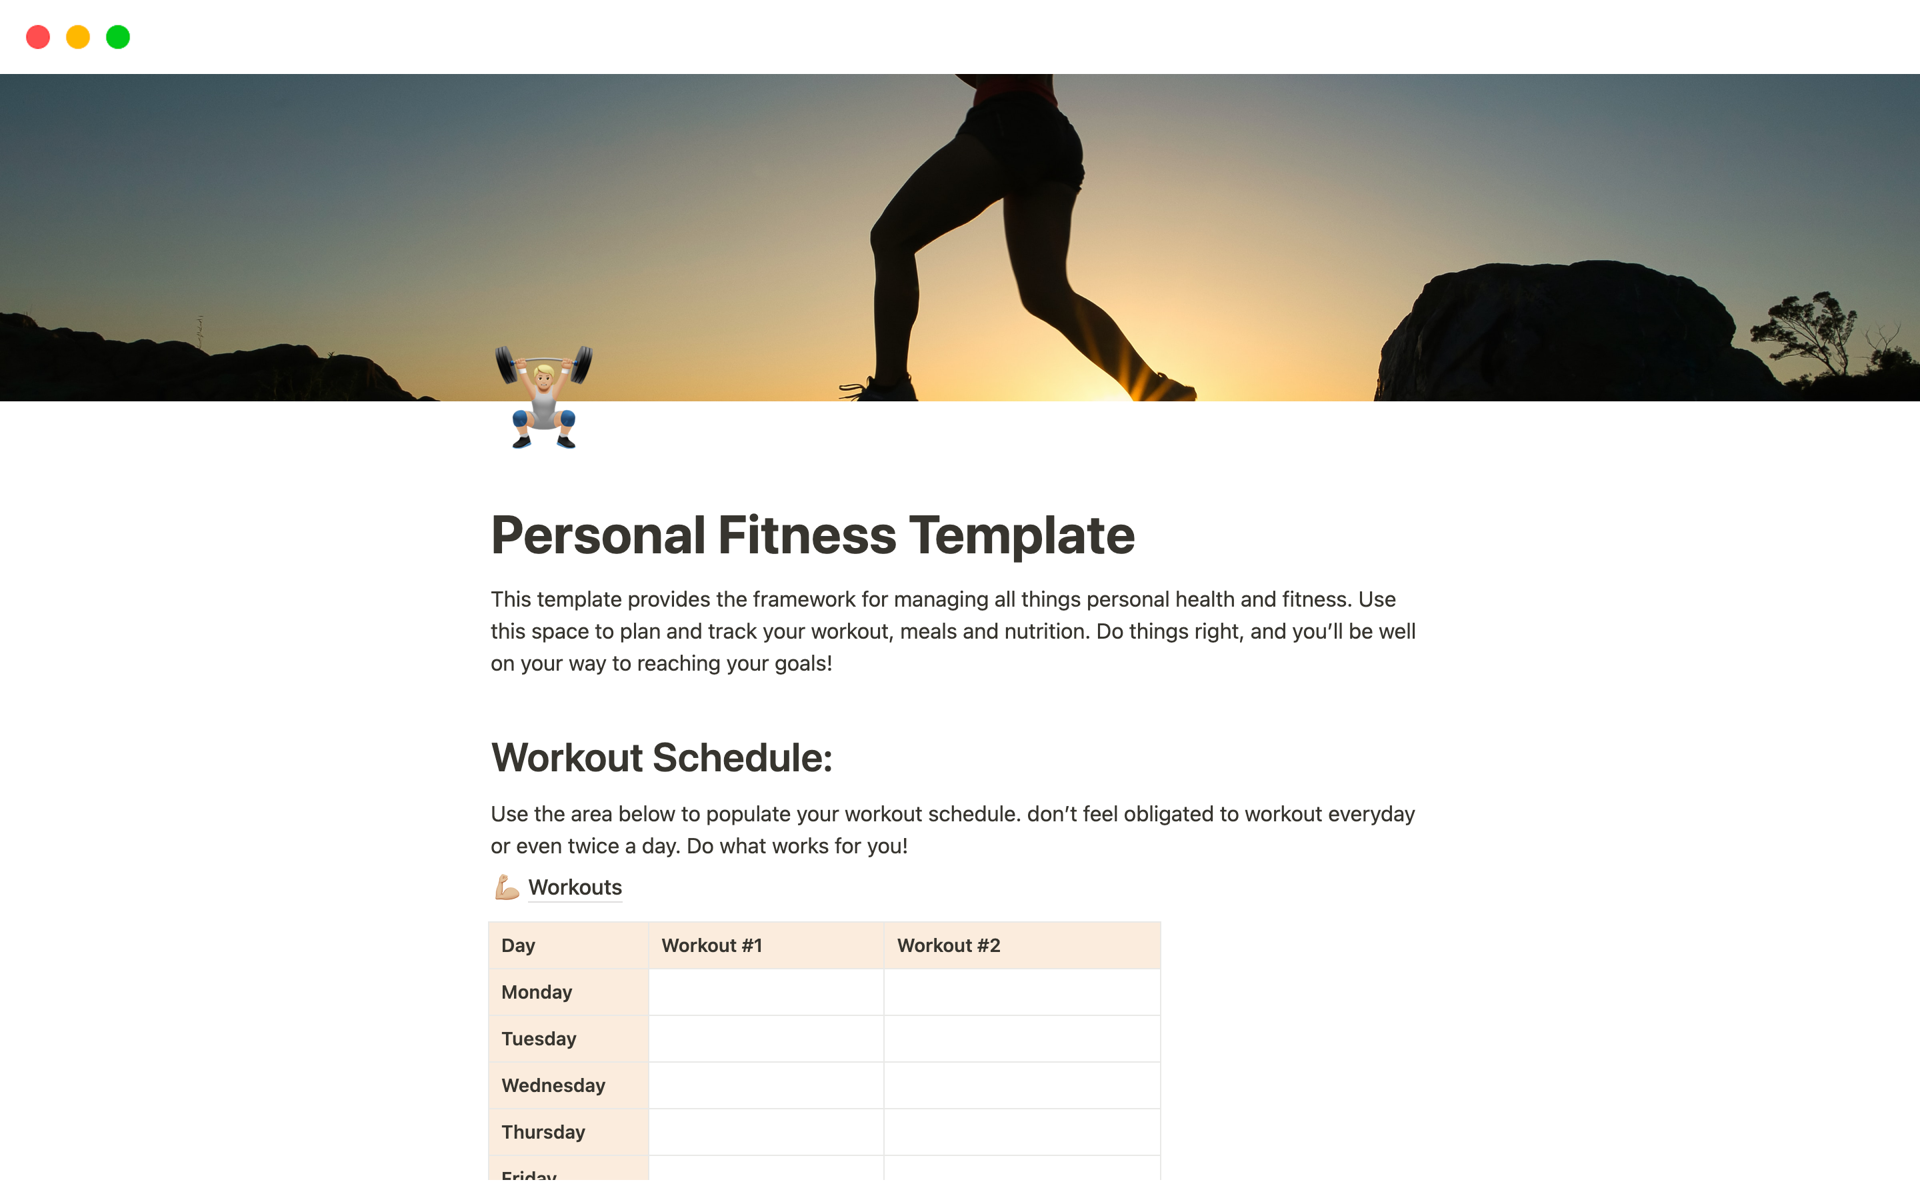 Vista previa de plantilla para Personal Fitness Template